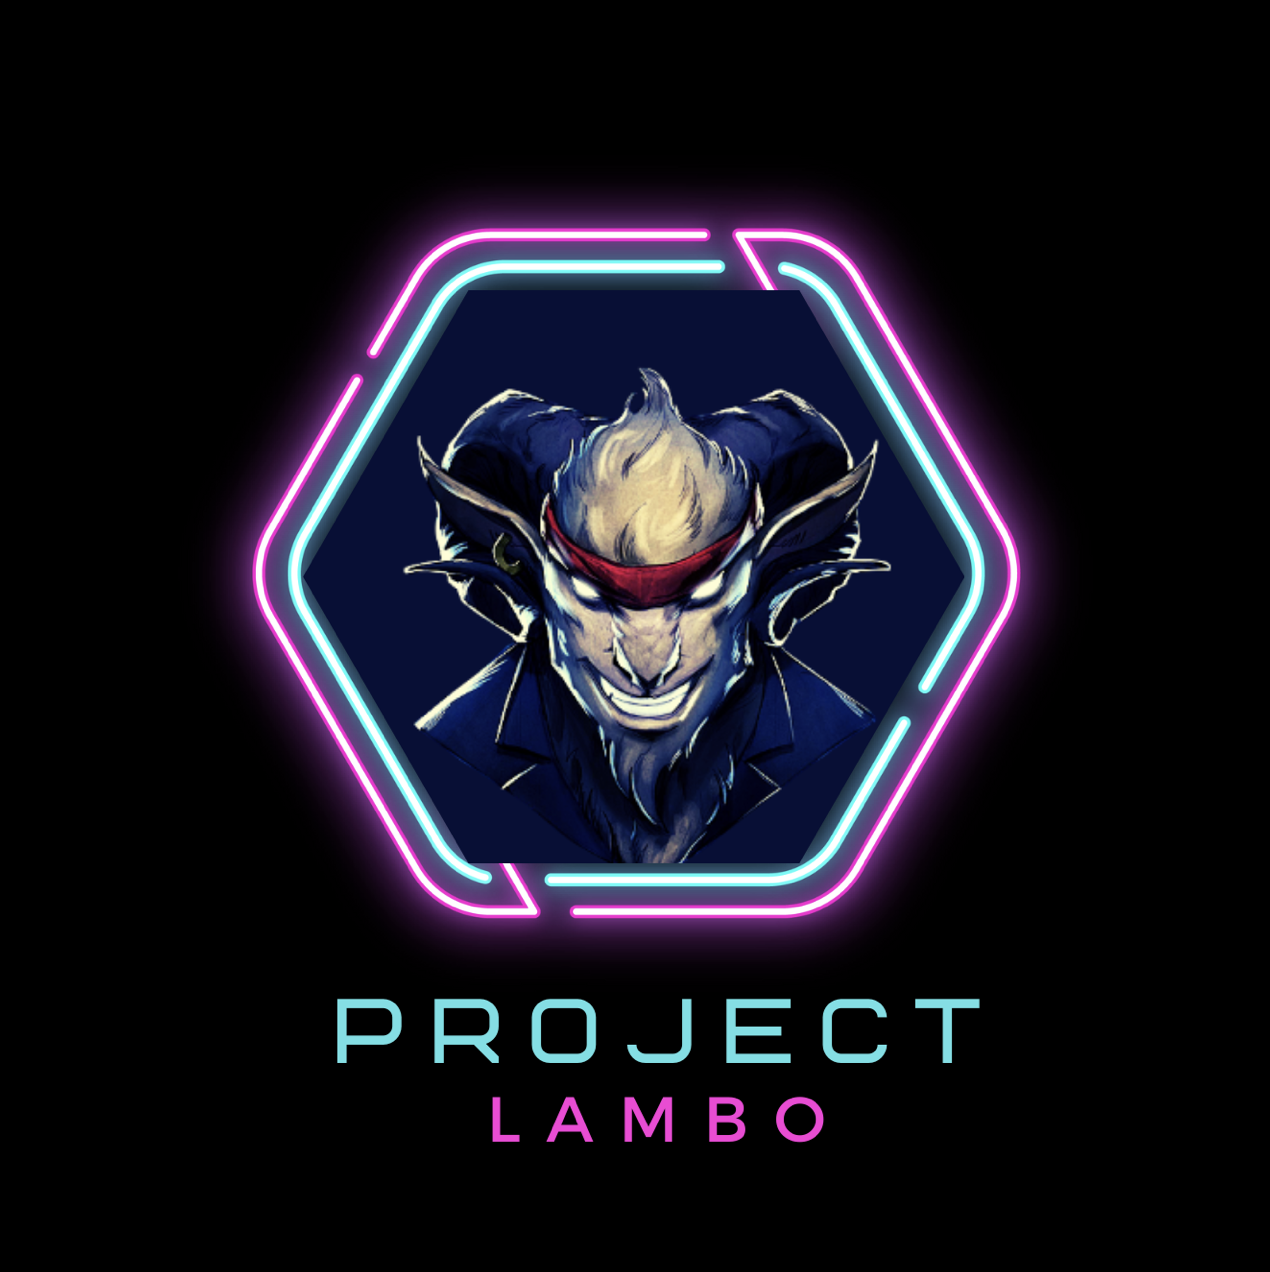 Project Lambo